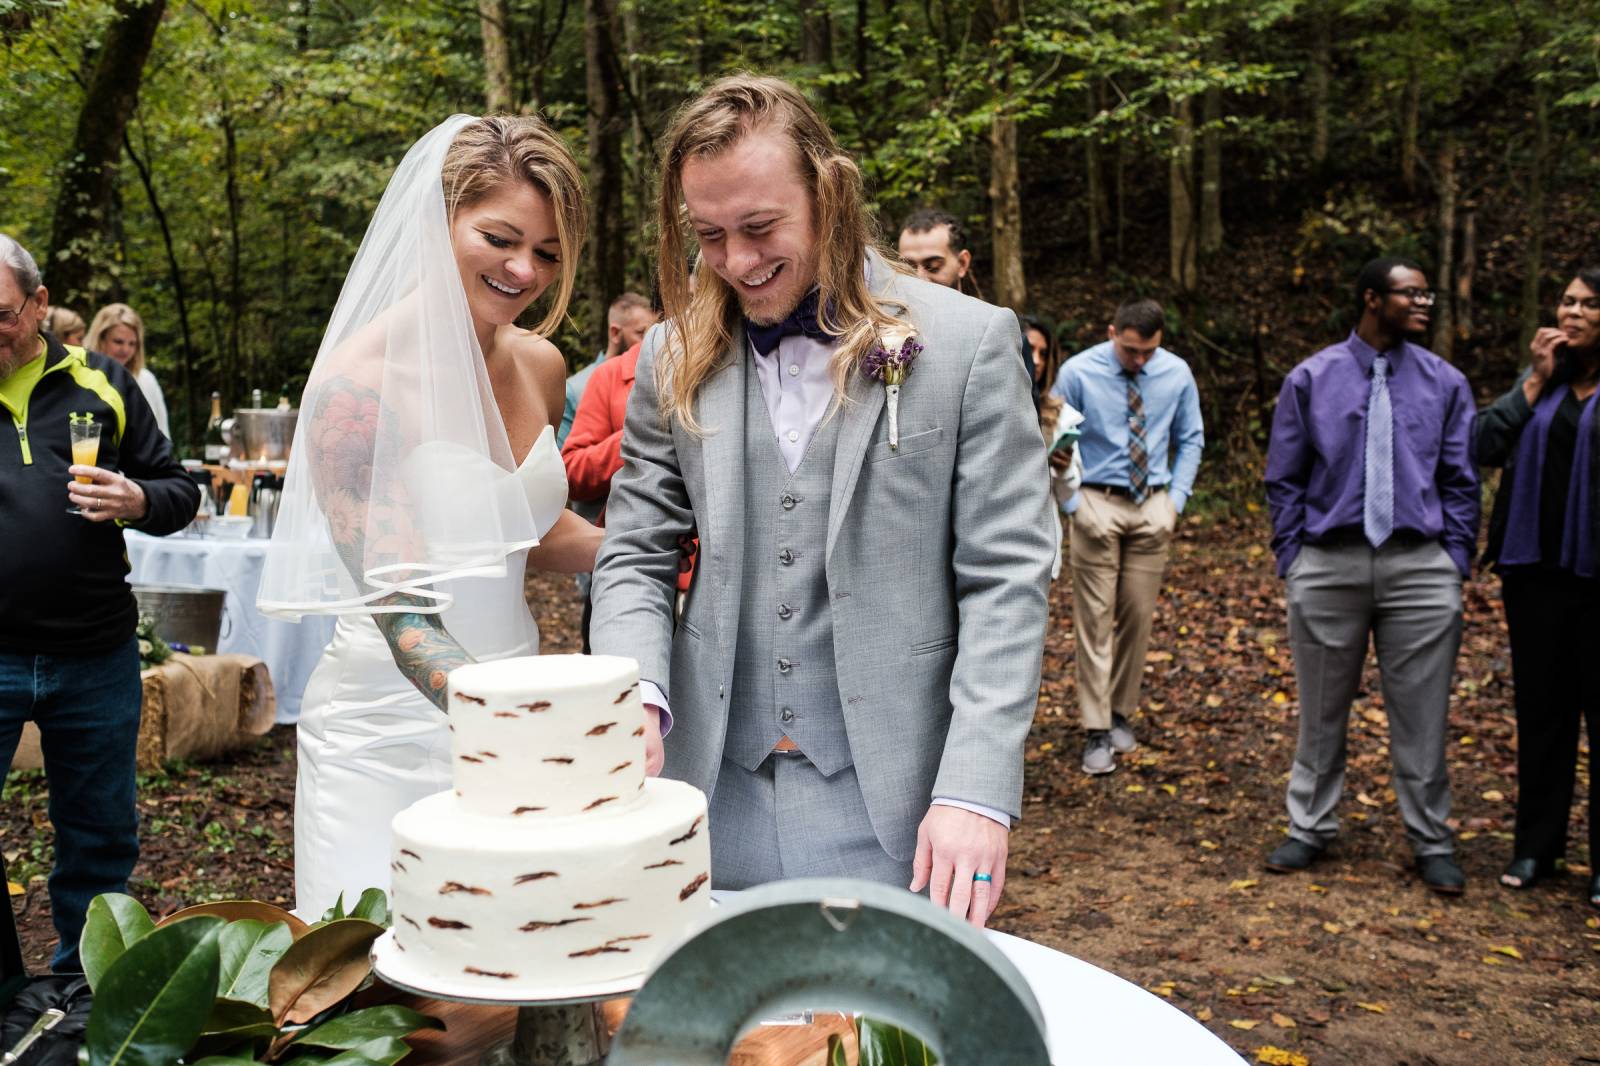 Blake and Carissa’s Wedding in the Woods |  Nashville, TN